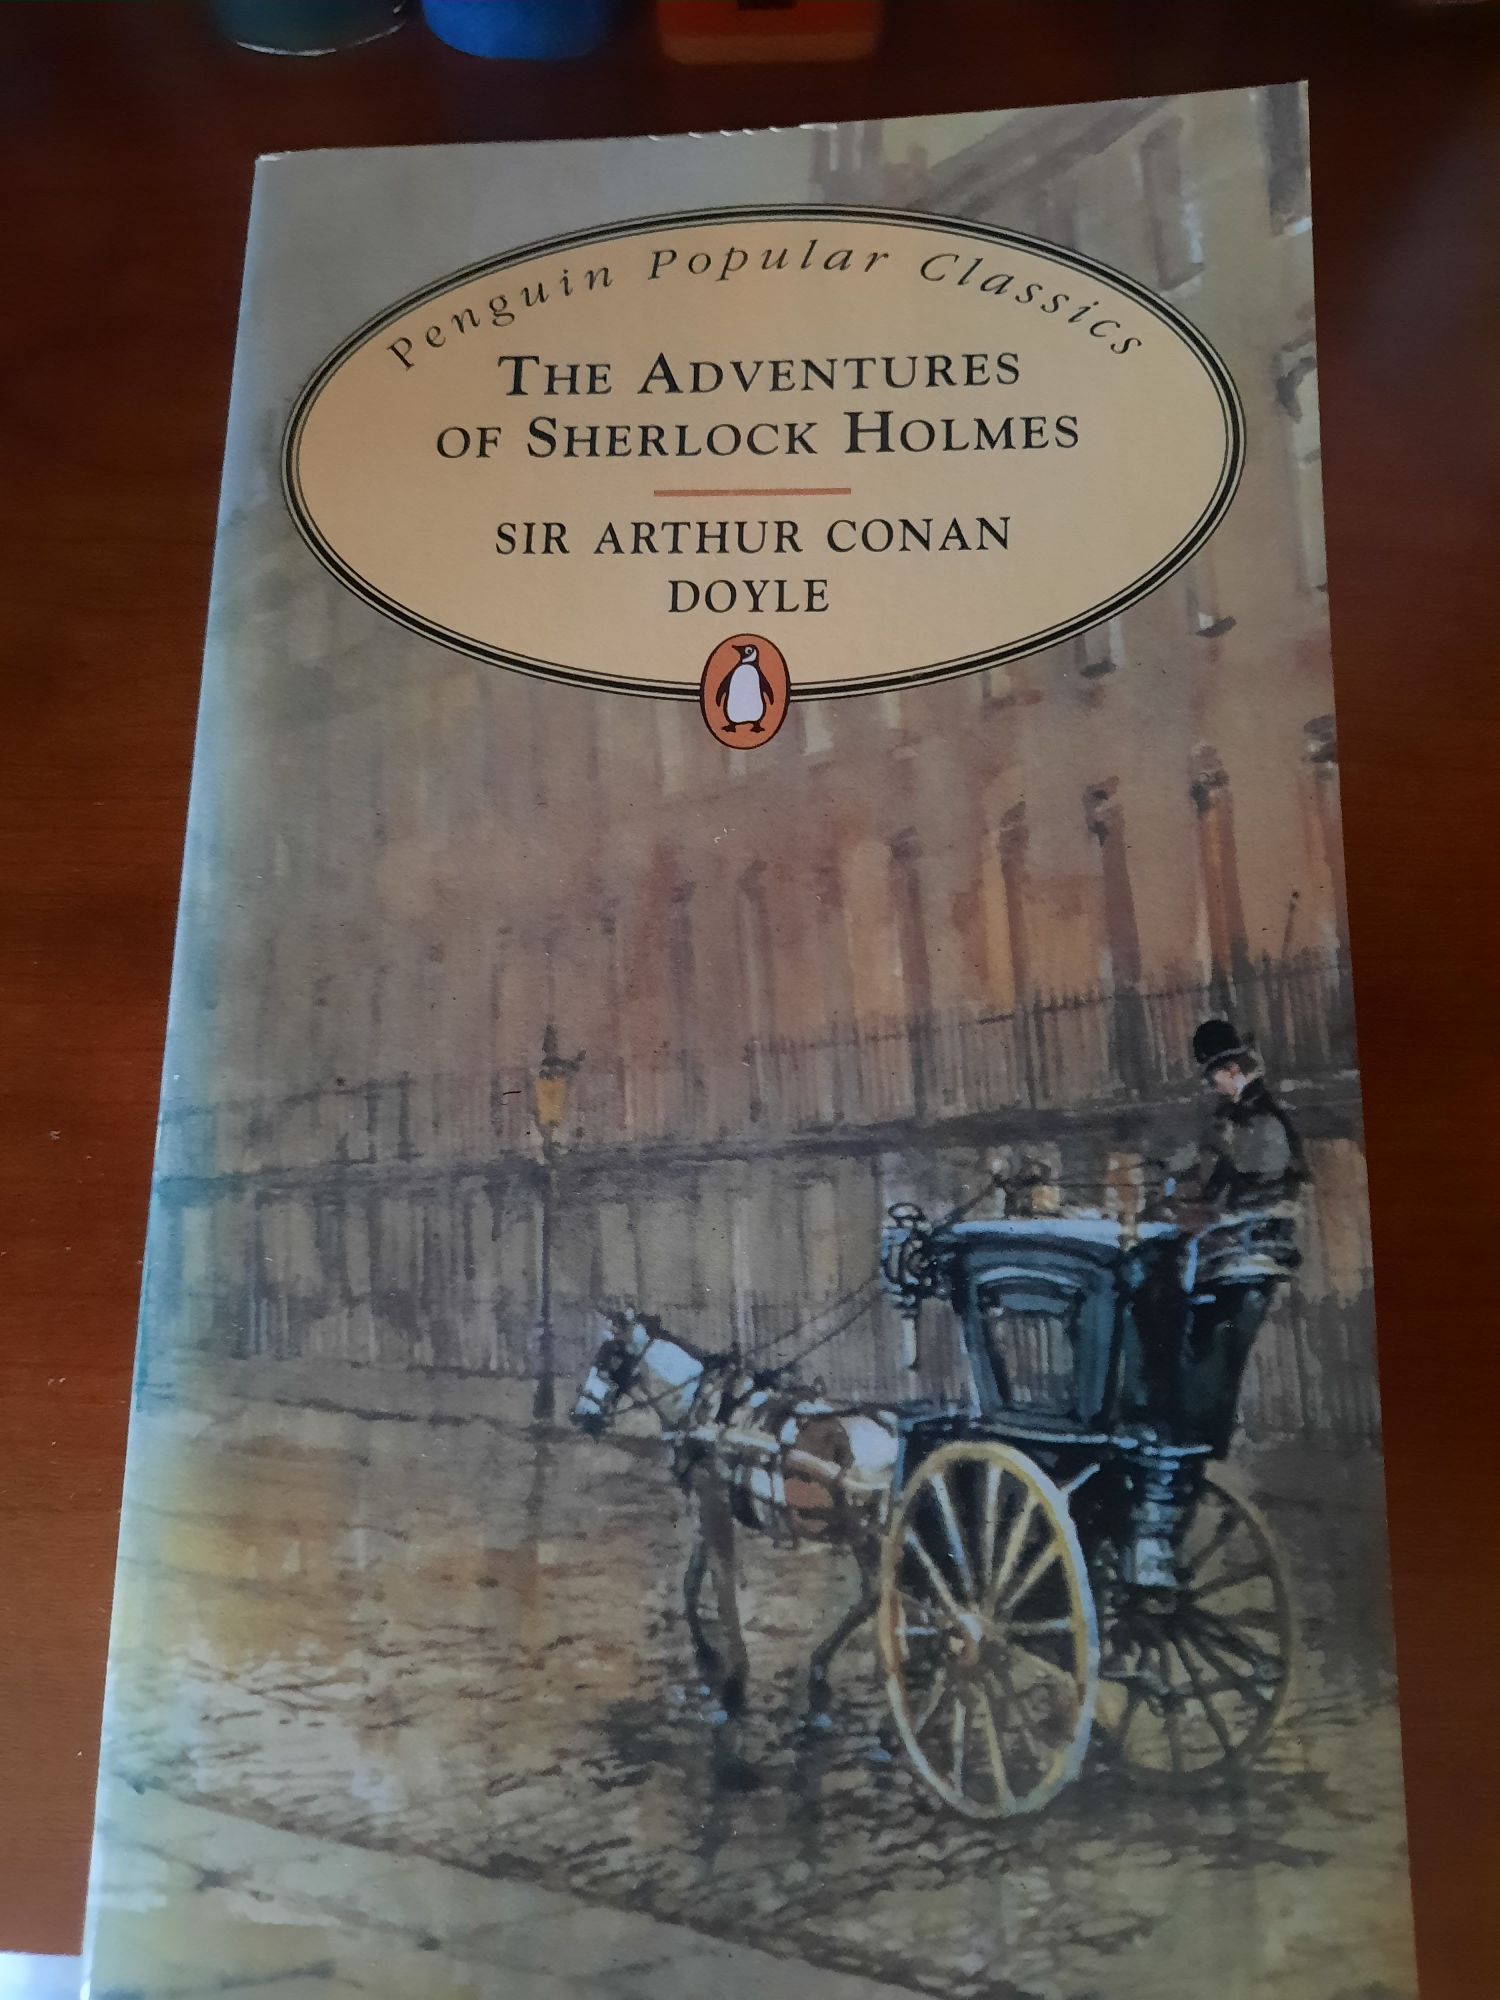 The Adventures of Sherlock Holmes.